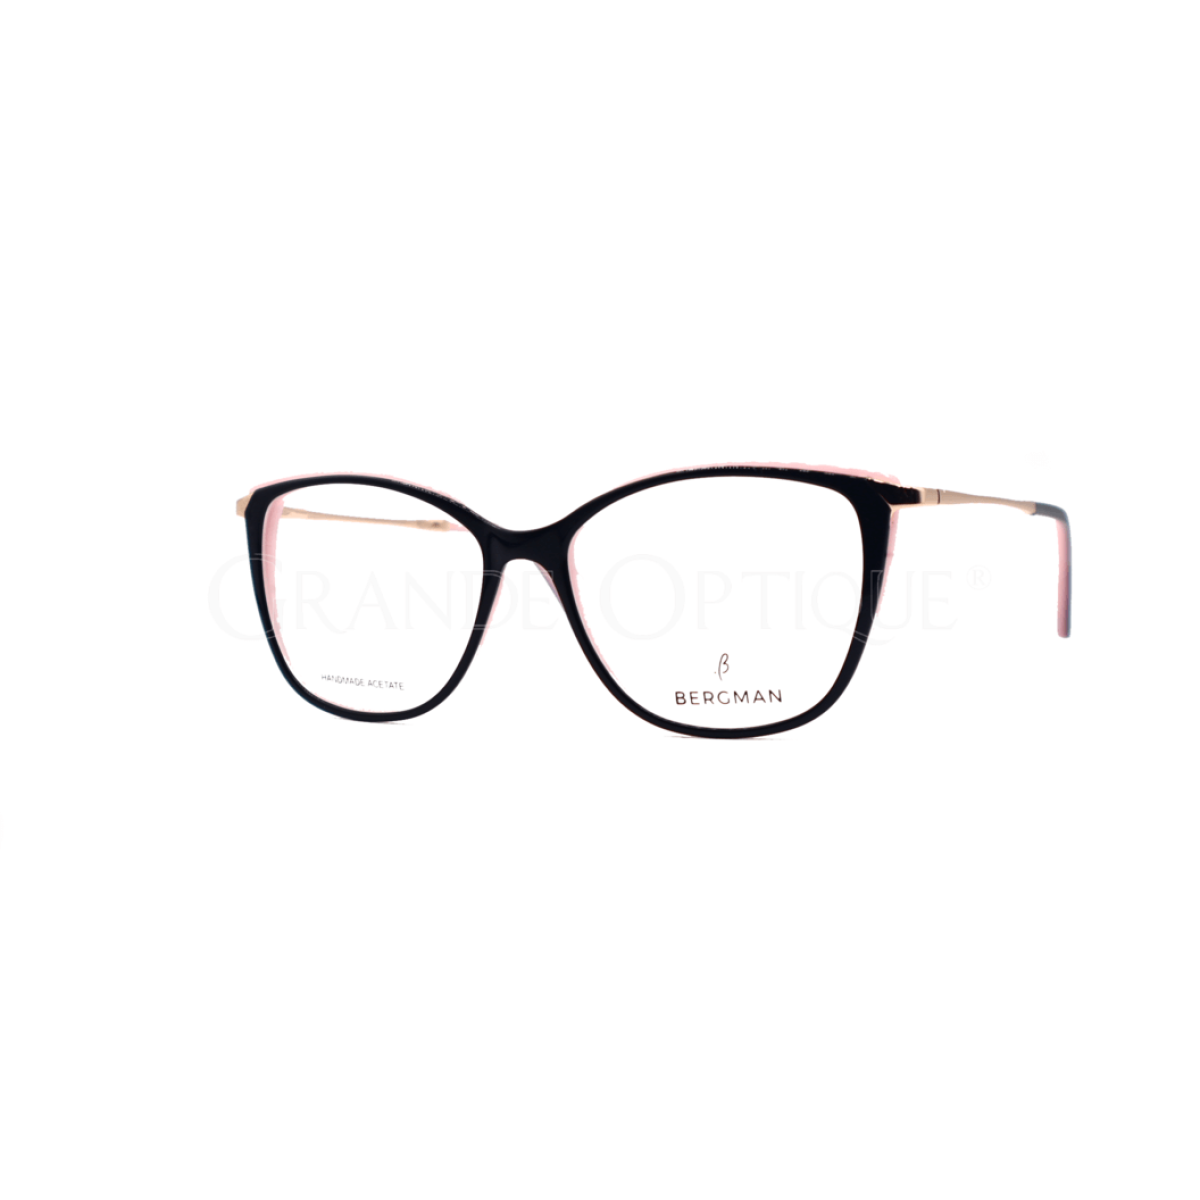 Rame de ochelari Bergman 4714 c7